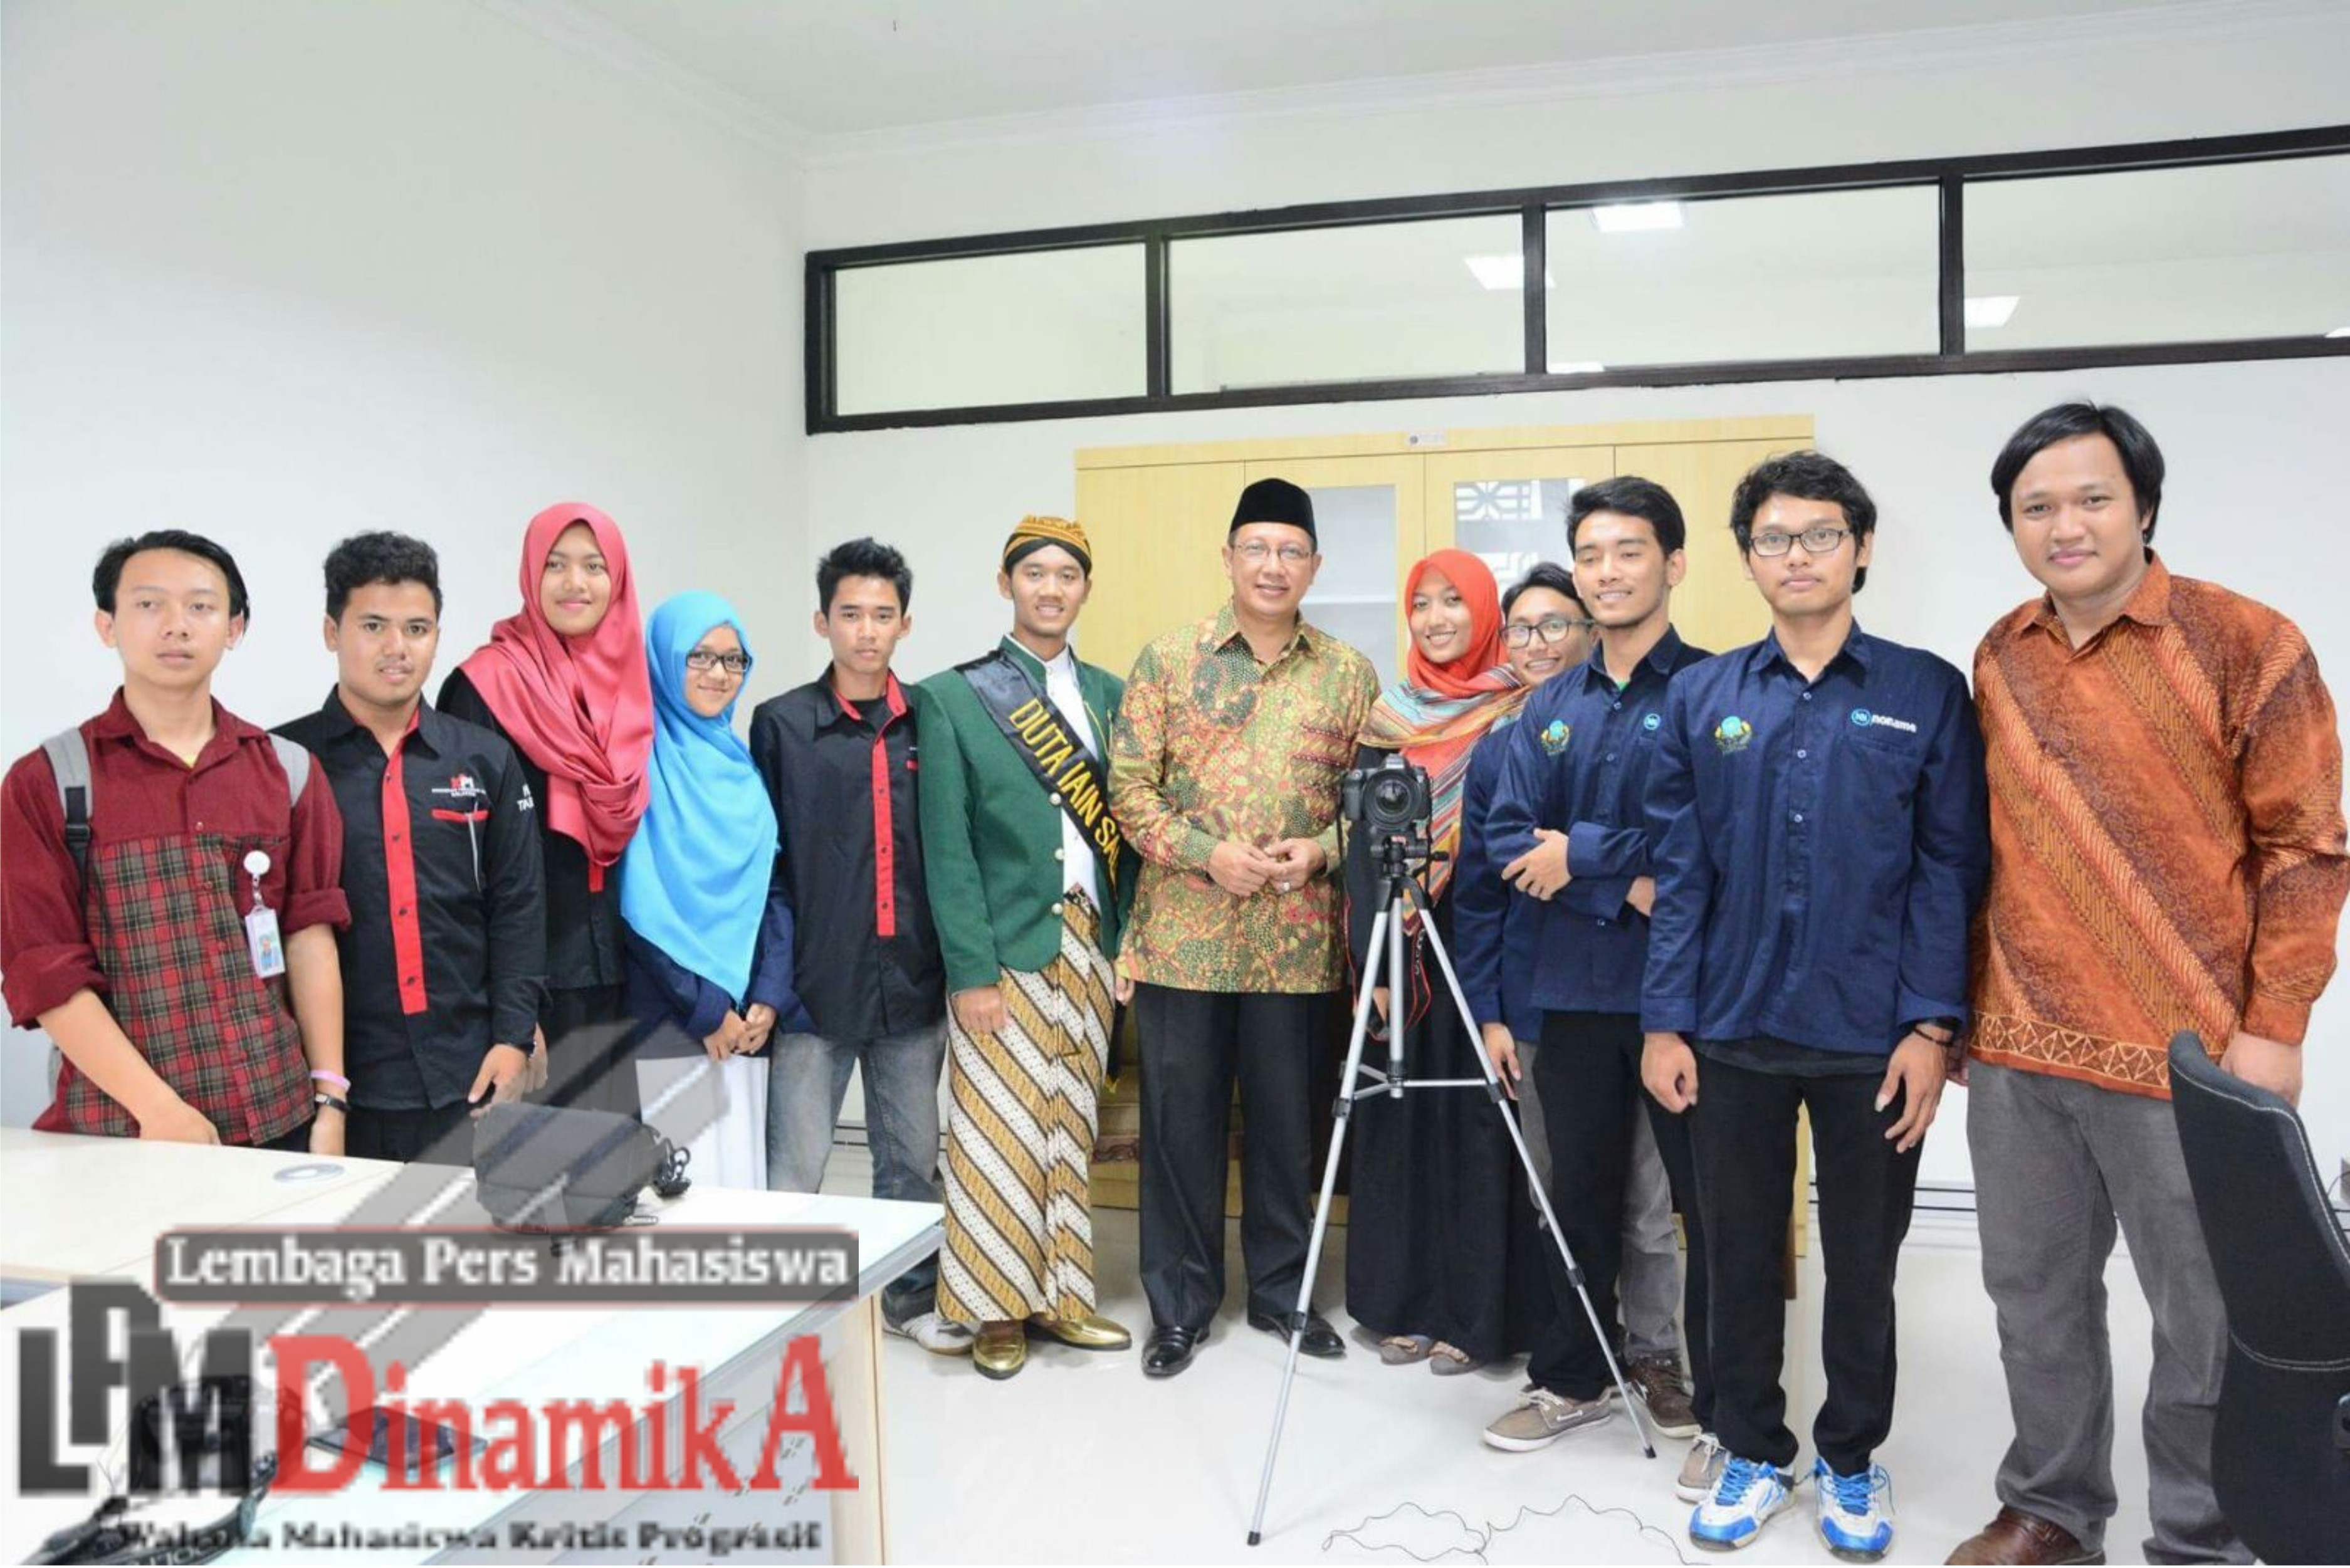 Pengambilan gambar setelah wawancara (Tengah: Menteri Agama, Paling kanan: Rifqi Aulia Erlangga). Sumber gambar: Hakim, KPI 2015.